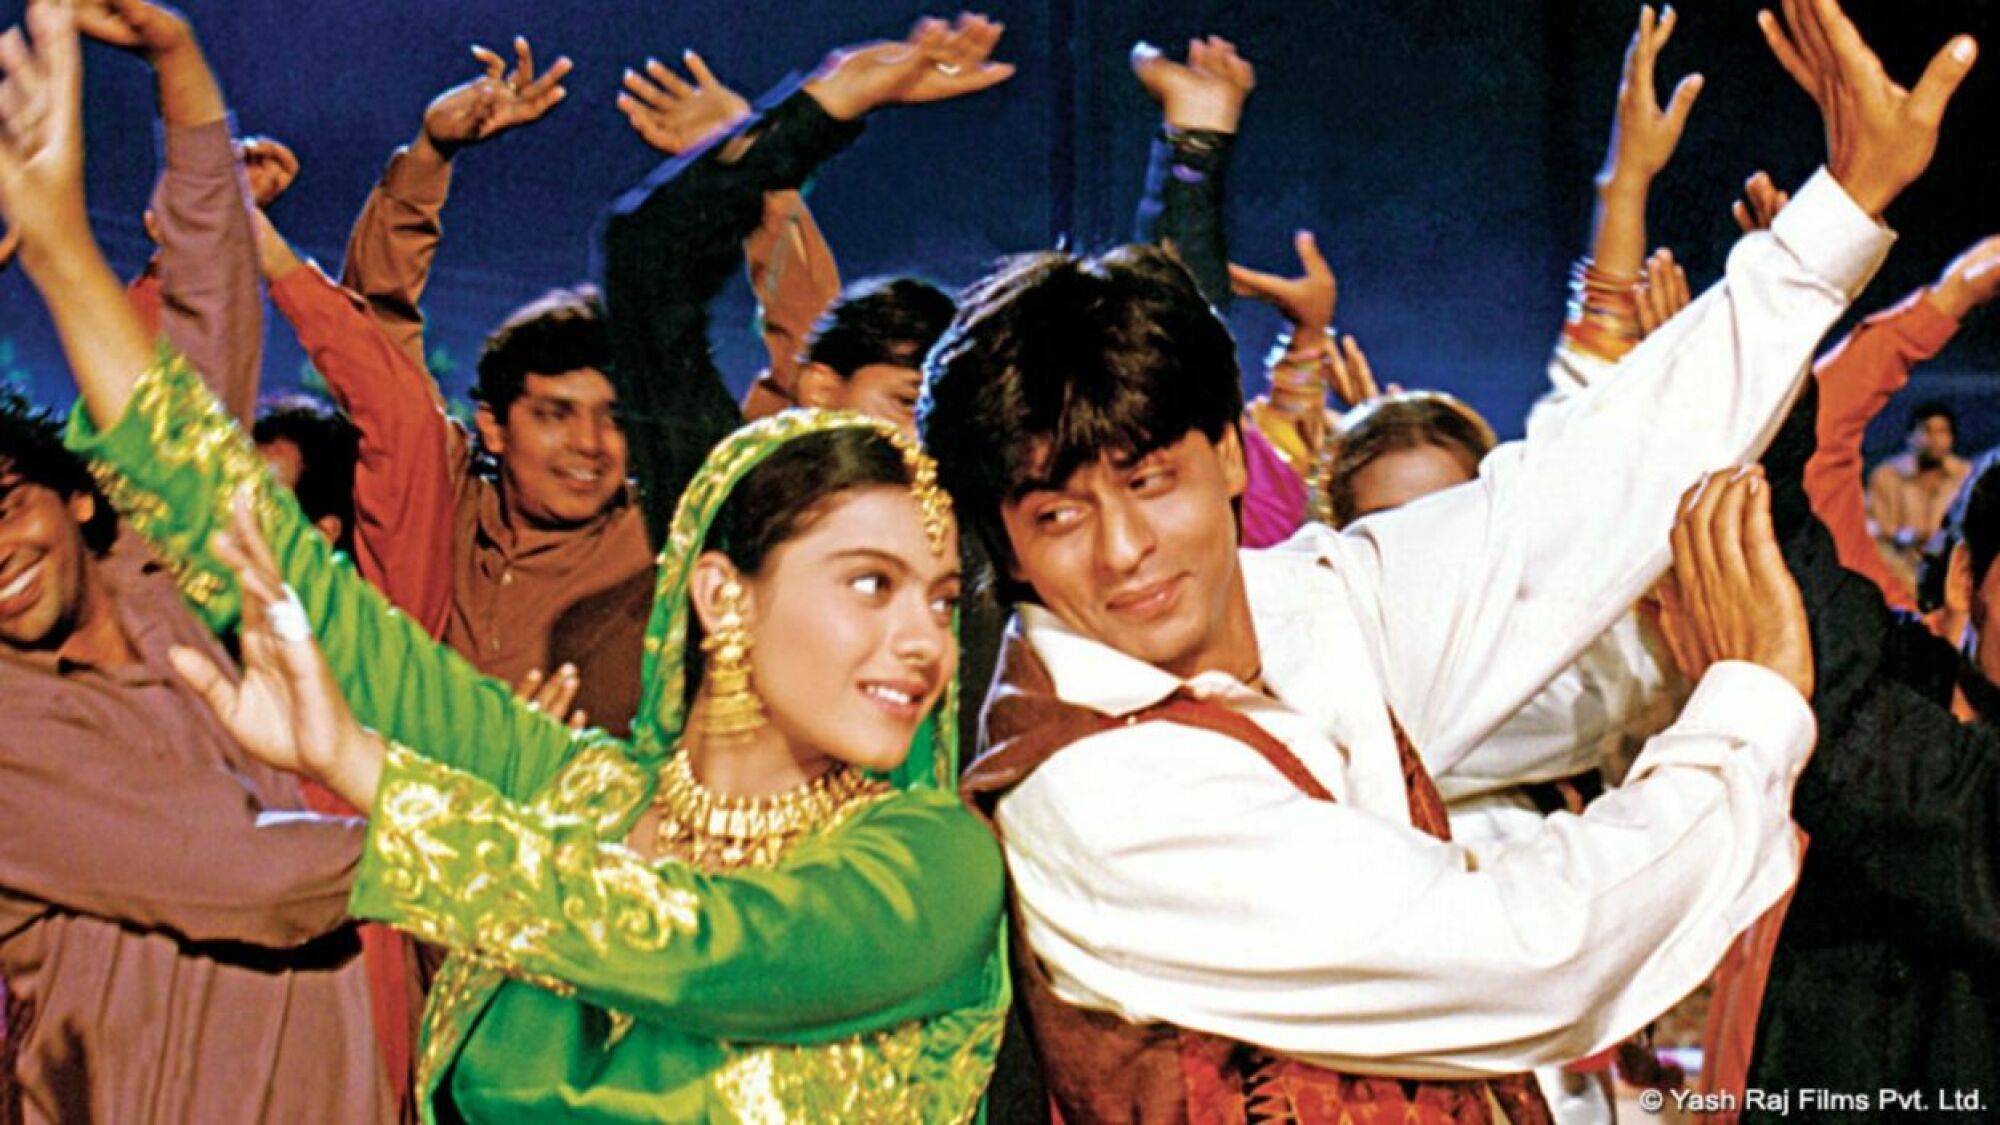 Shah Rukh Khan and Kajol in 'Dilwale Dulhania Le Jayenge'.